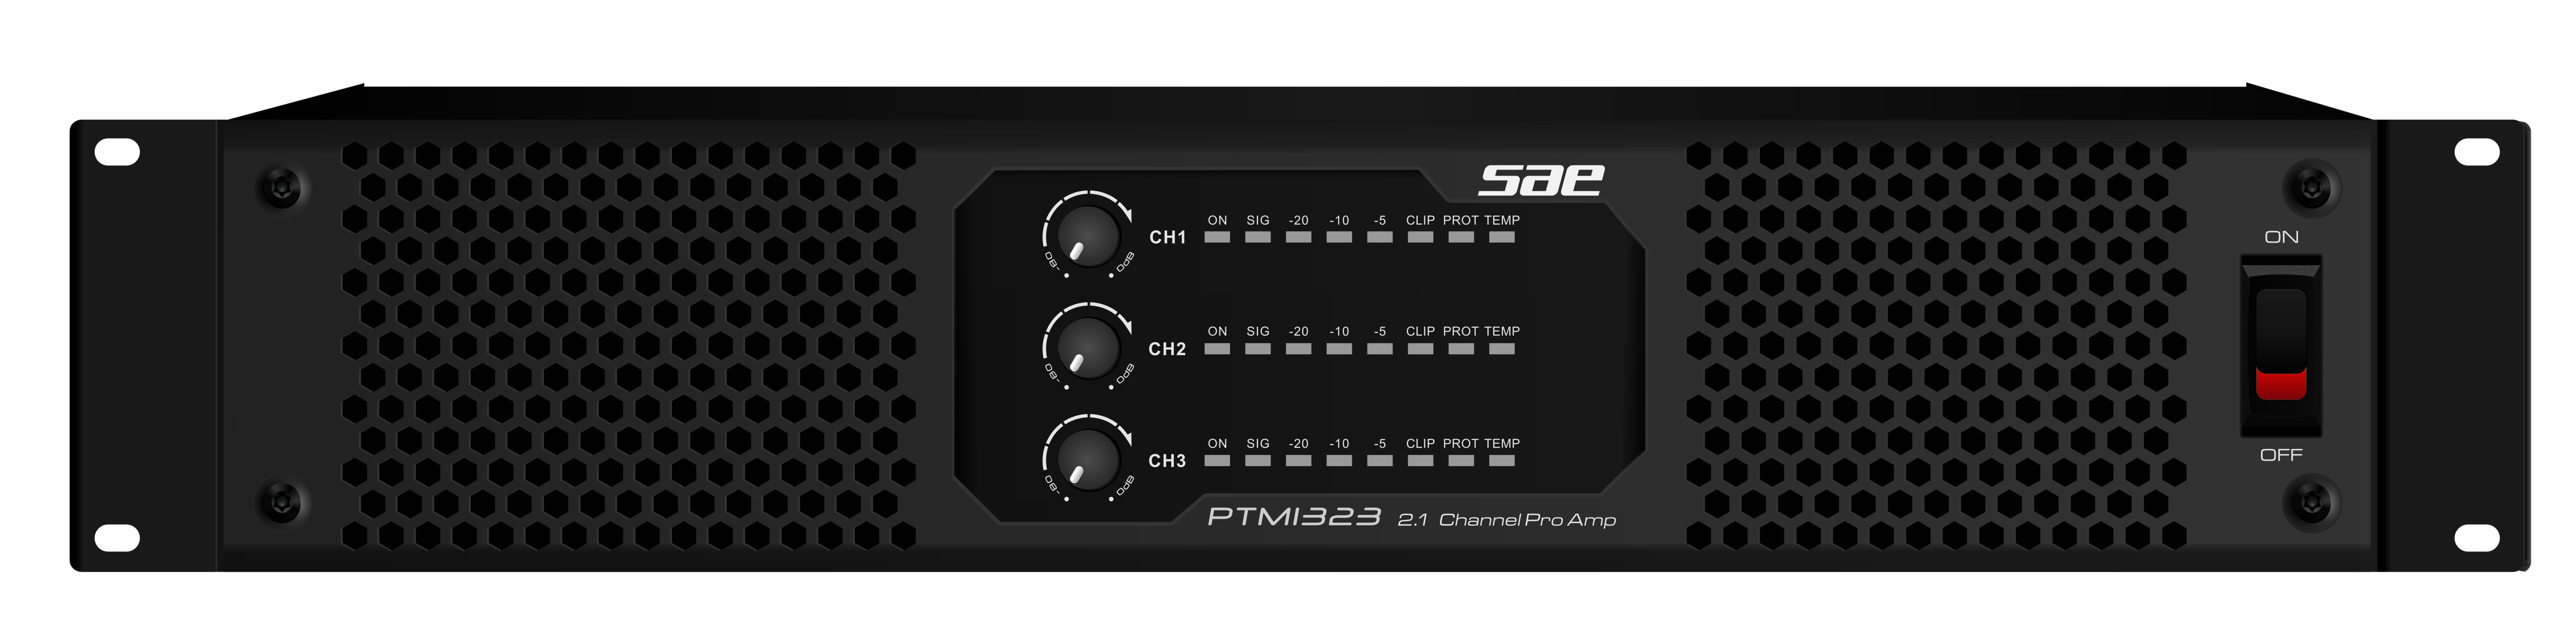 SAE PTM1323 series user's manual